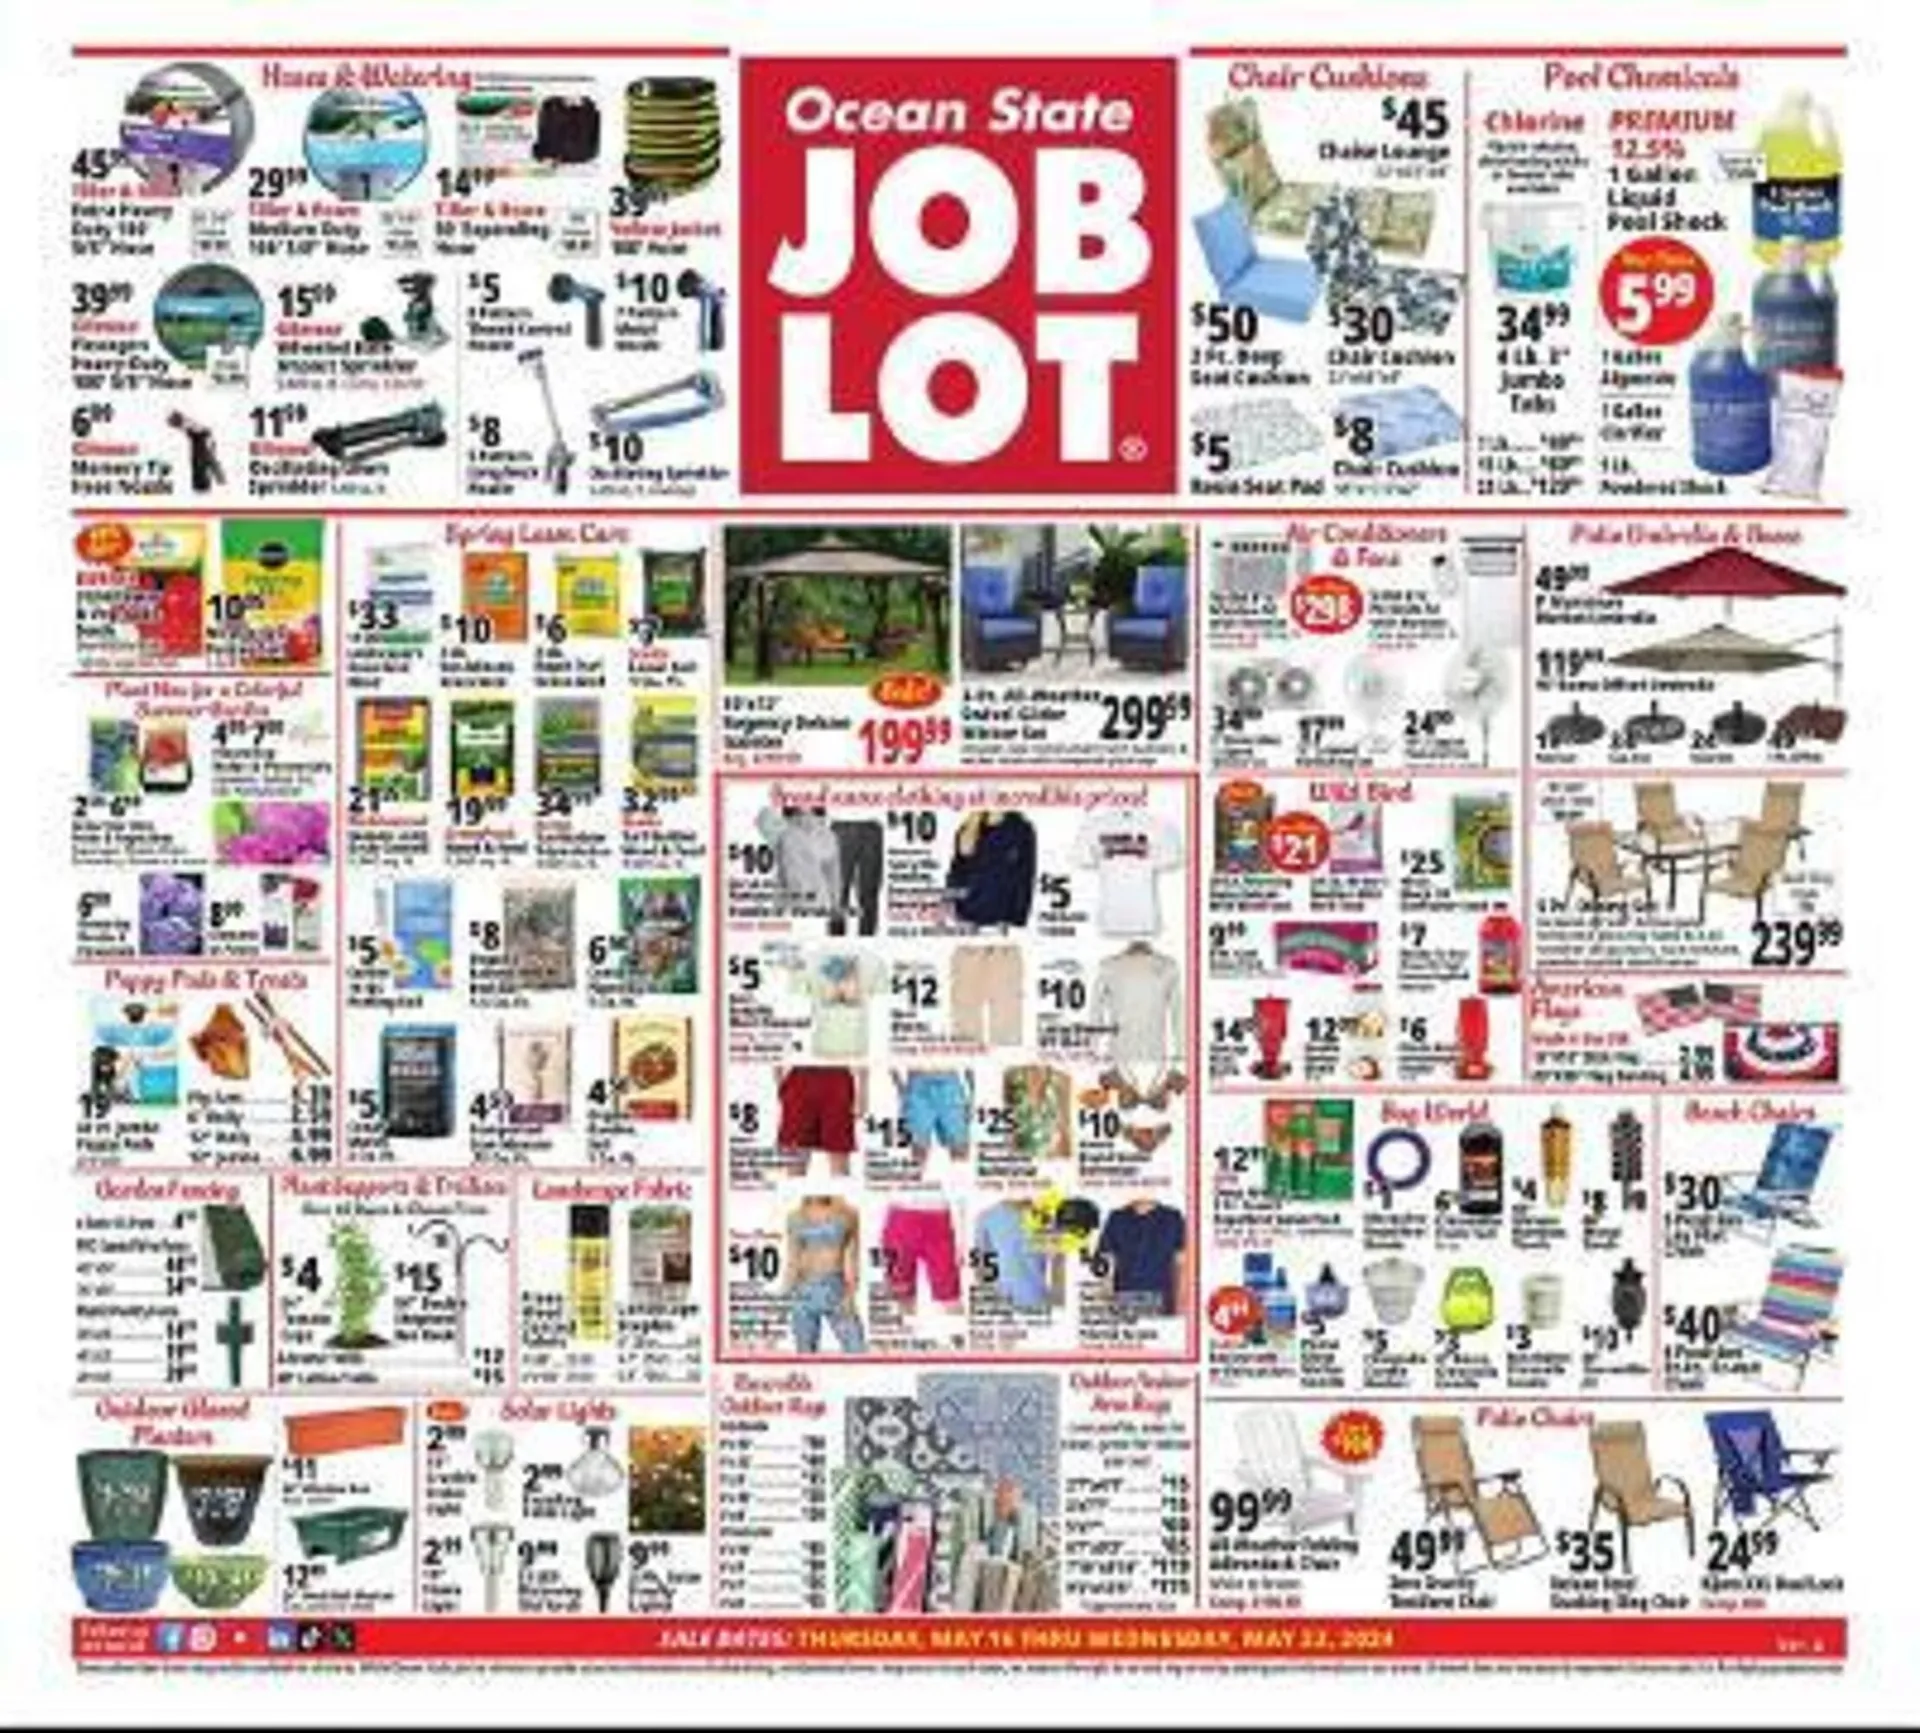 Ocean State Job Lot Weekly Ad - 1